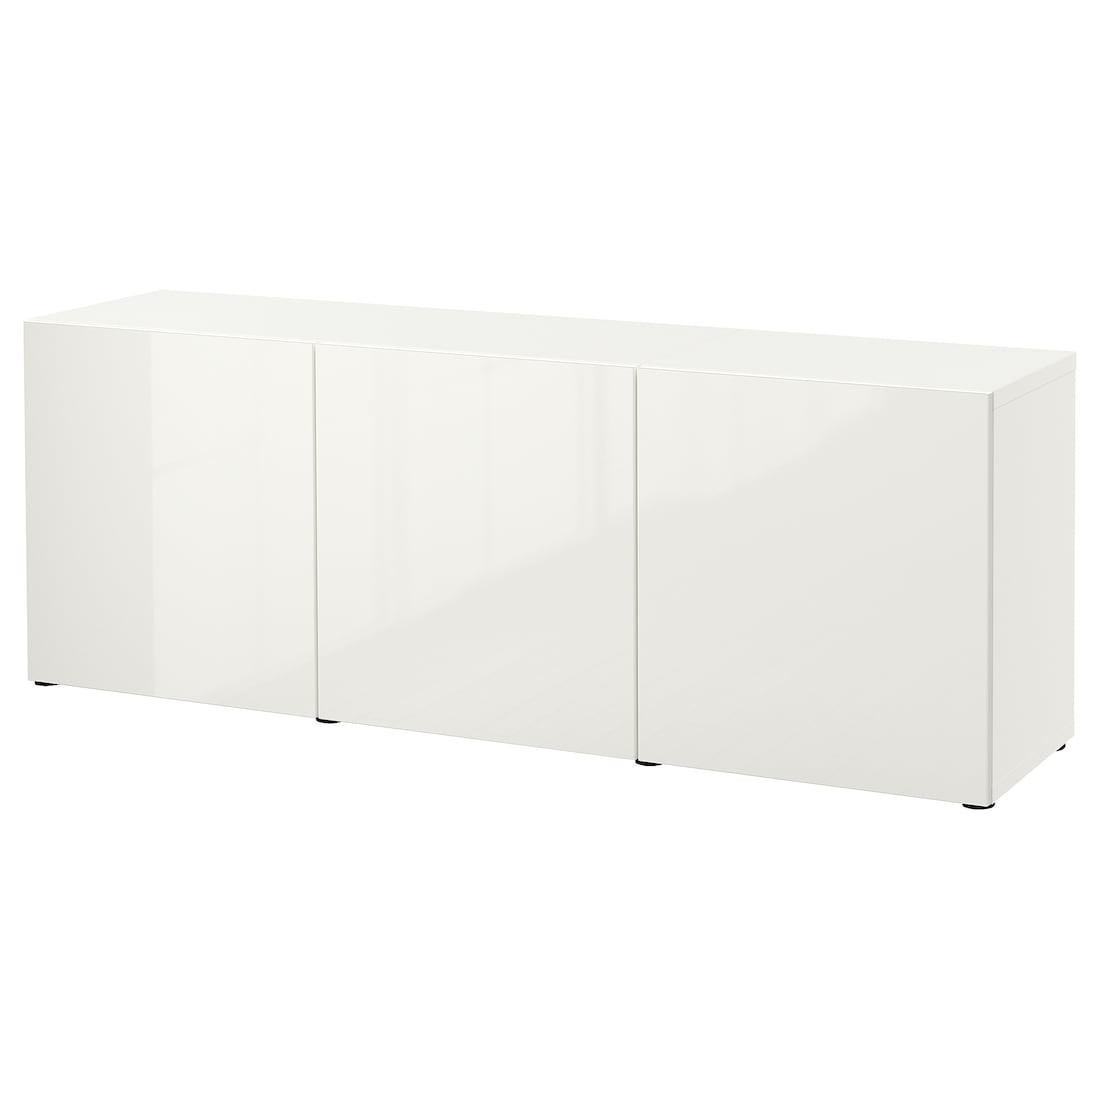 IKEA BESTÅ БЕСТО Комбинация для хранения с дверцами, белый / Selsviken глянцевый / белый, 180x42x65 см 29324990 293.249.90